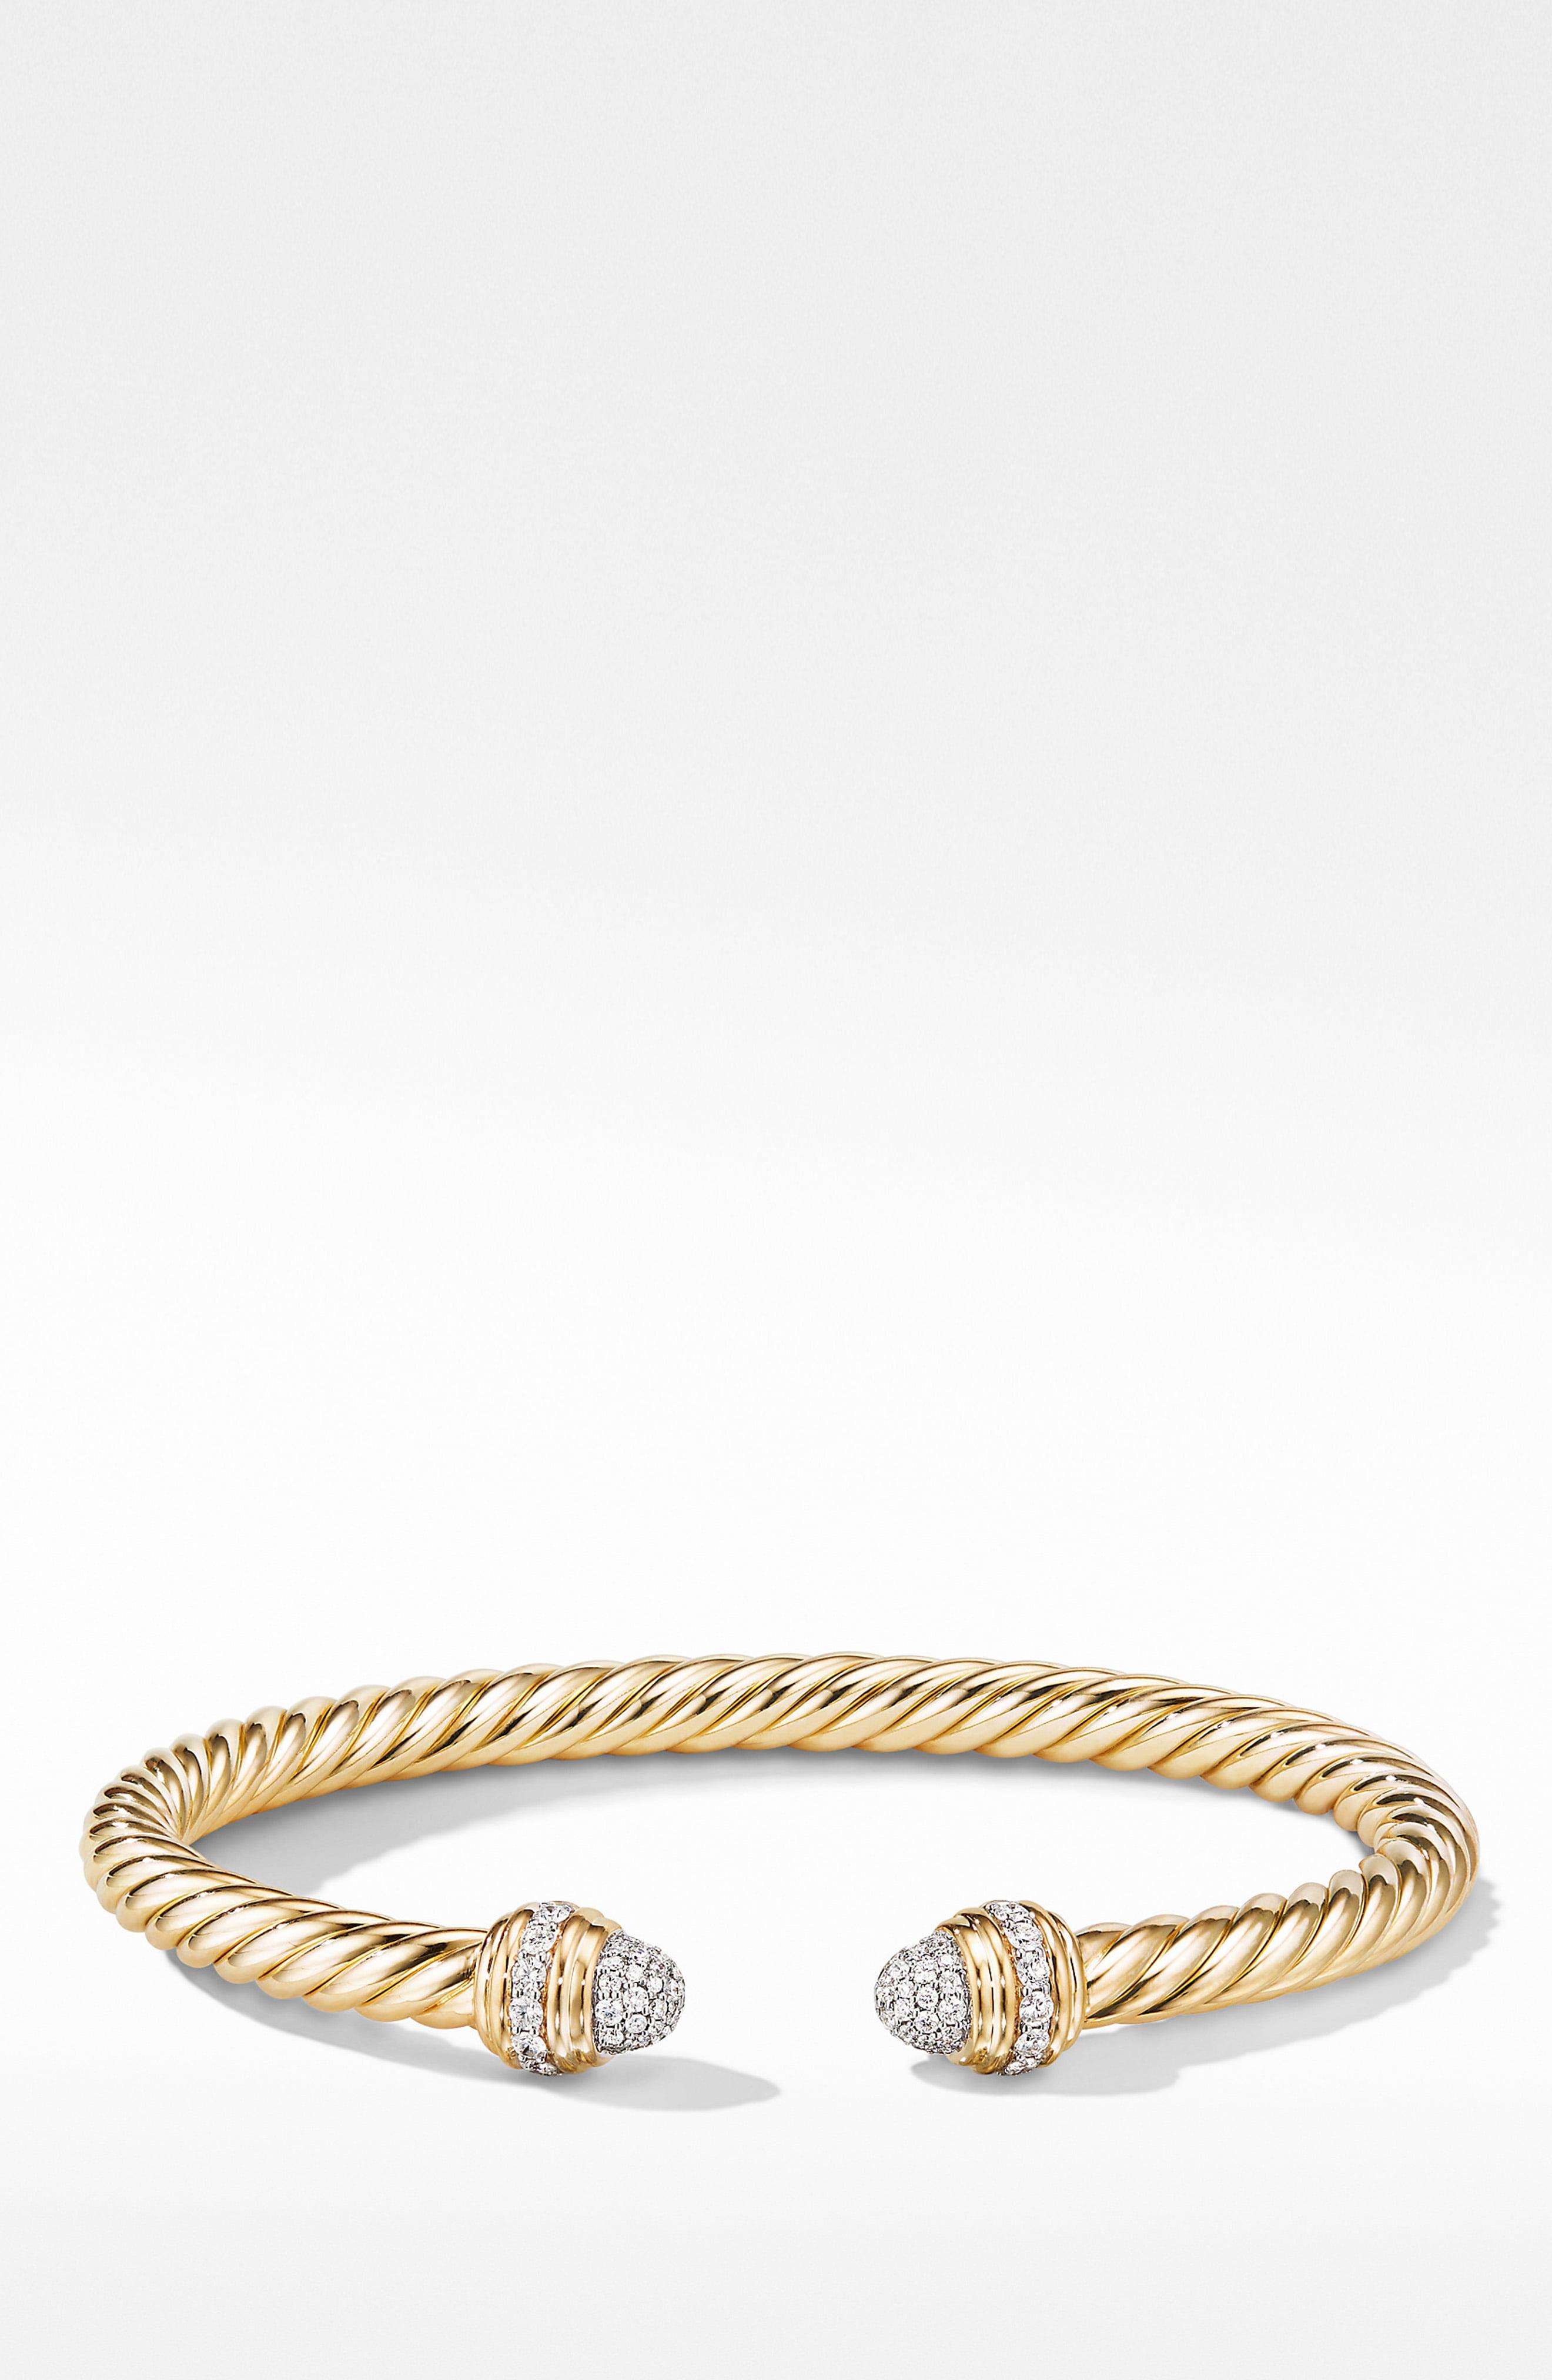 Lyst - David Yurman Cable Cuff Bracelet With Diamonds in Metallic